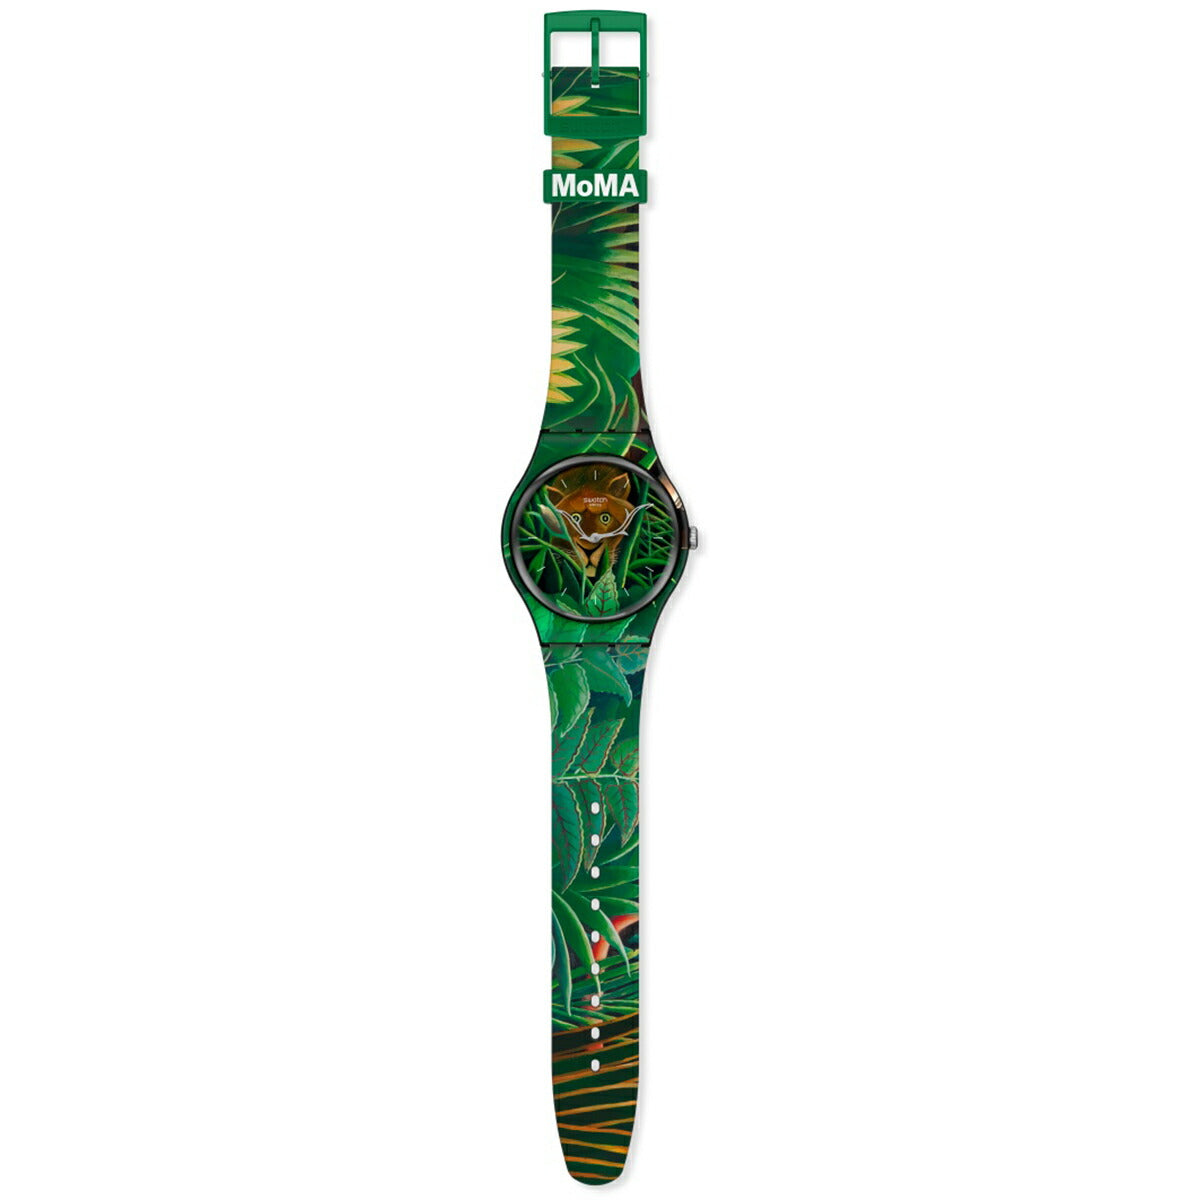 swatch スウォッチ MoMA 腕時計 メンズ レディース ニュージェント ザ・ドリーム・バイ・アンリ・ルソー ザ・ウォッチ New Gent THE DREAM BY HENRI ROUSSEAU、THE WATCH SUOZ333